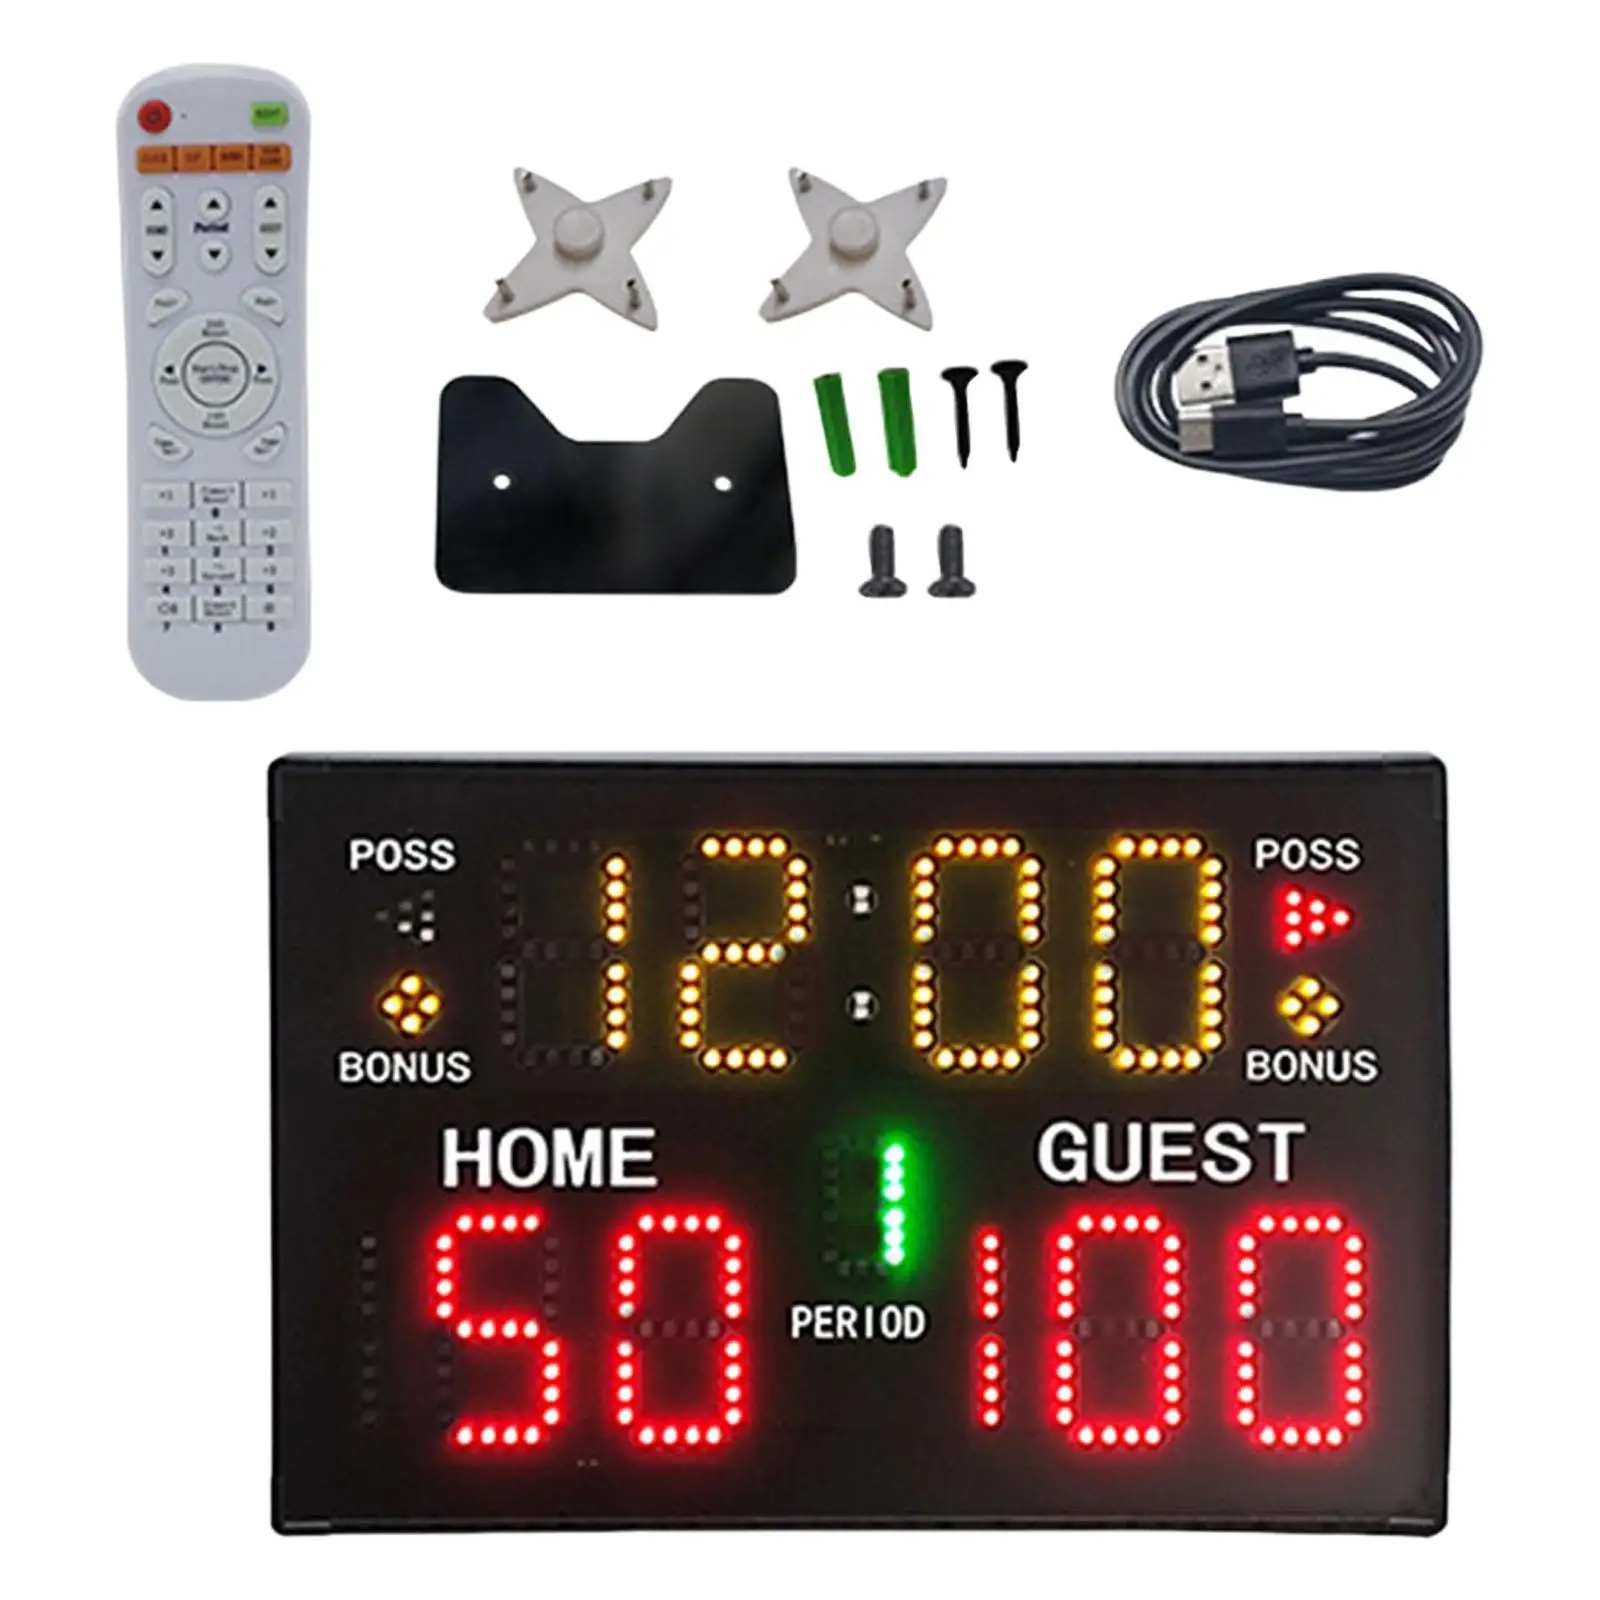 Tabletop Digital Scoreboard Score Clock Wall Mounted Battery Operated Electronic Scoreboard for Volleyball Tennis Basketball